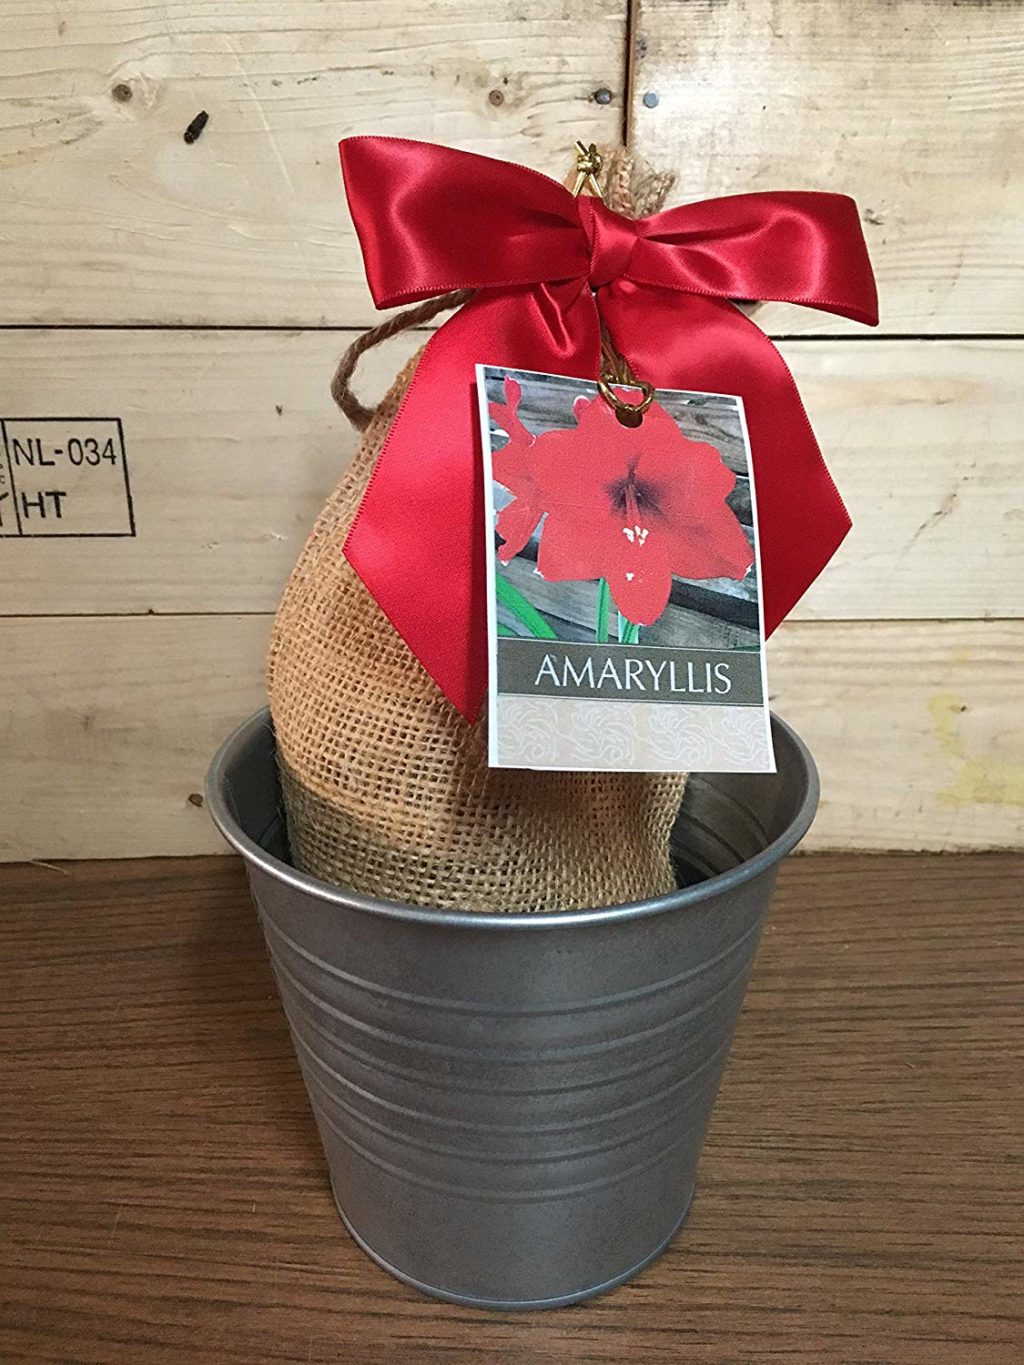 Amaryllis gardener gift